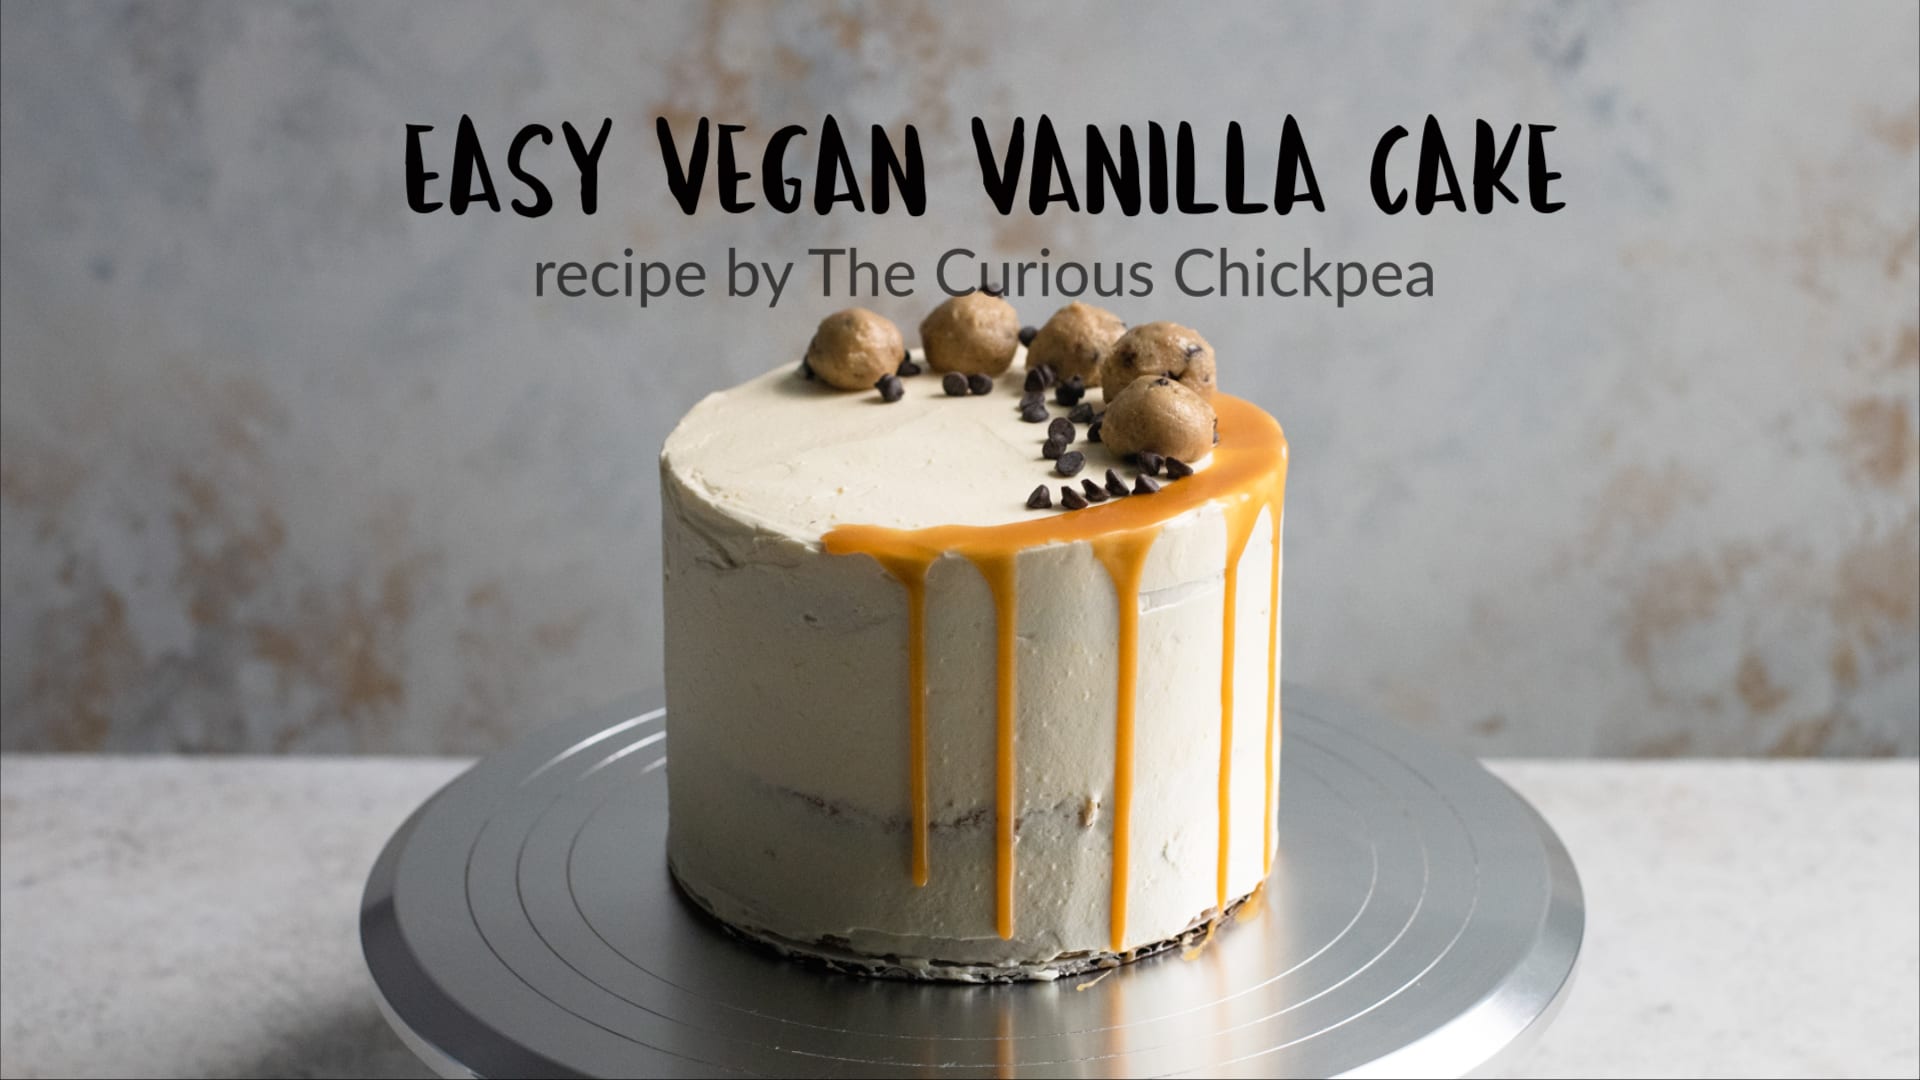 Vegan lemon drizzle - Vegan cake recipes